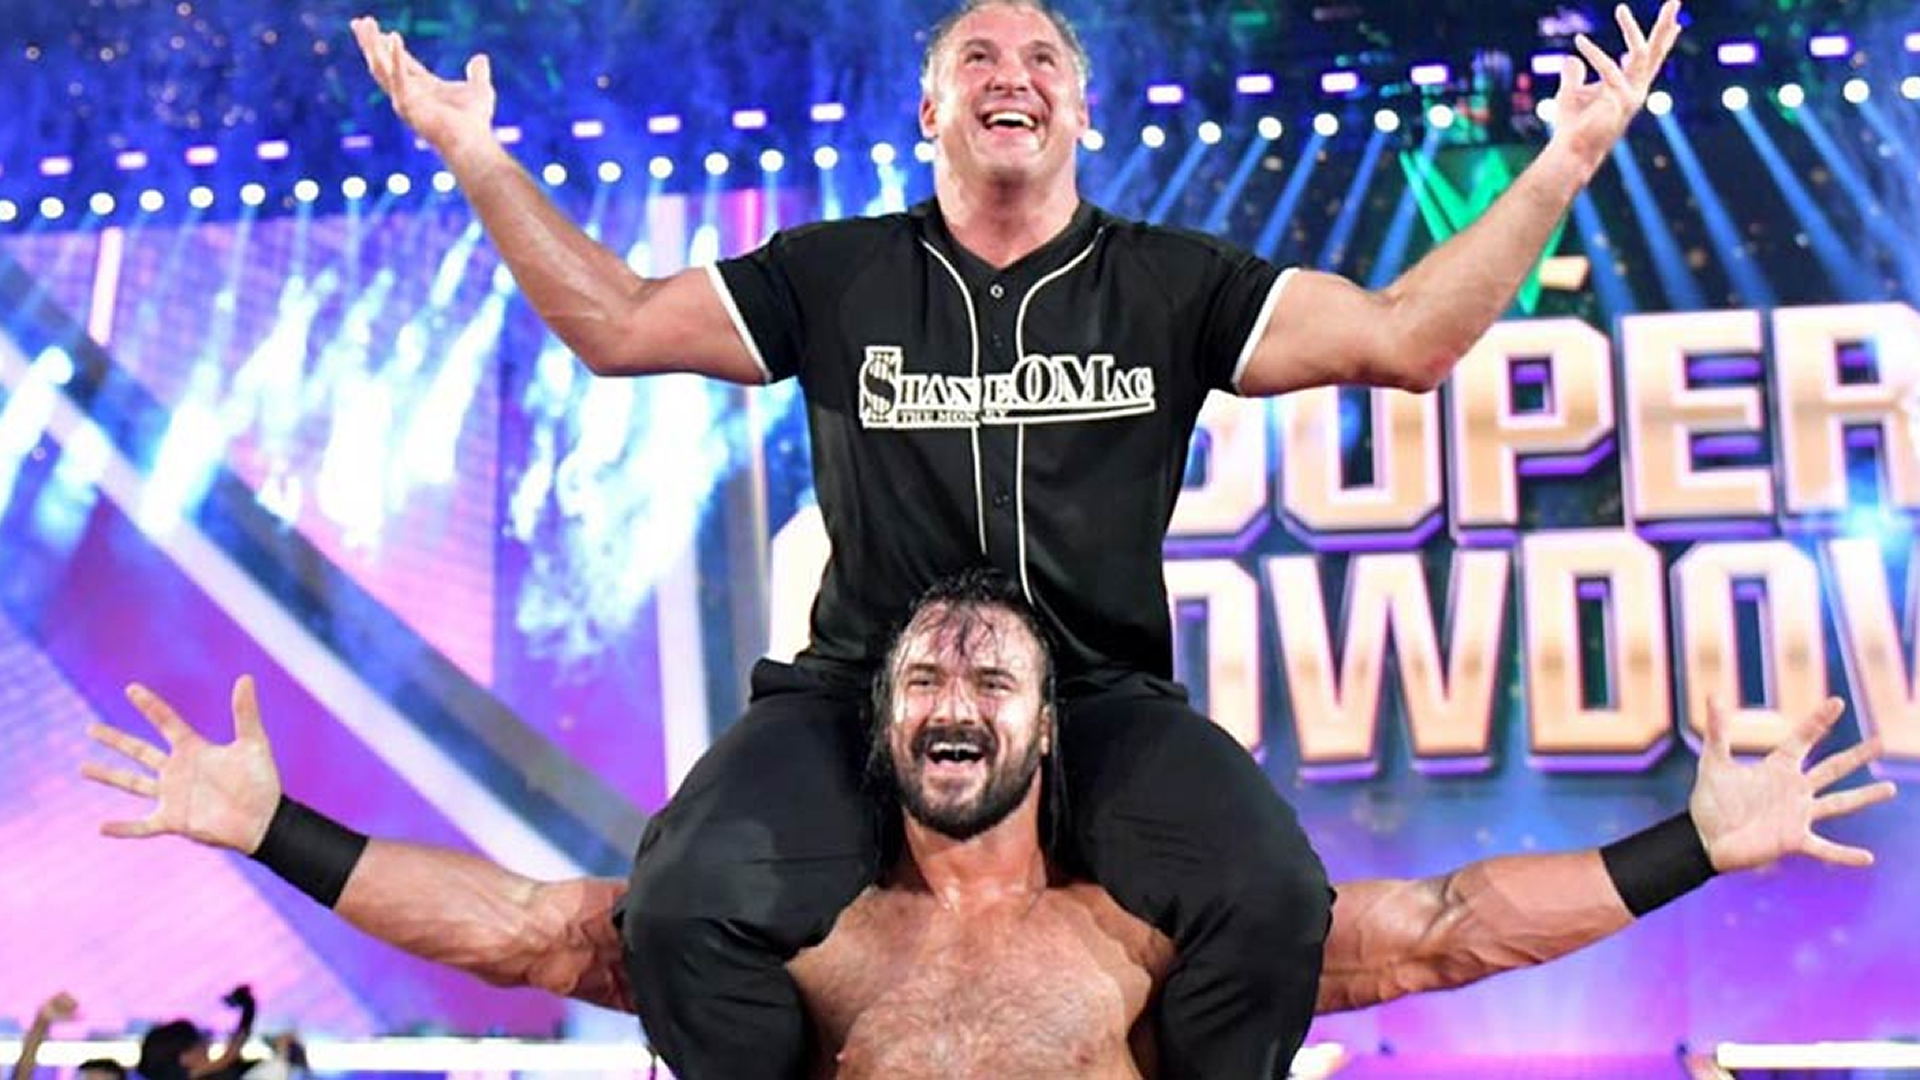 Wwe Super Showdown 2019 Roman Reigns Vs Shane Mcmahon - HD Wallpaper 